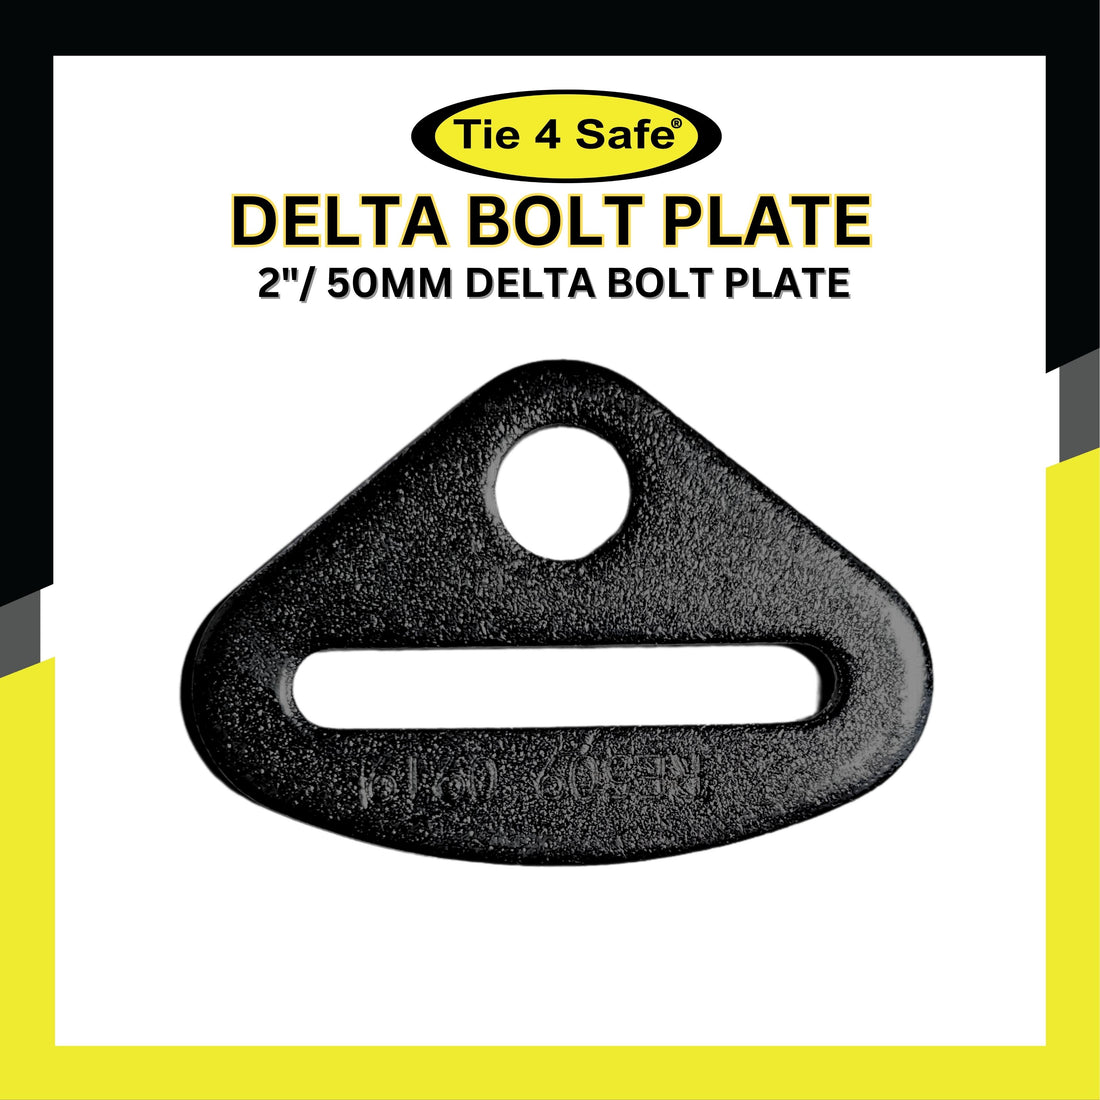 2"/ 50mm Delta Bolt Plate